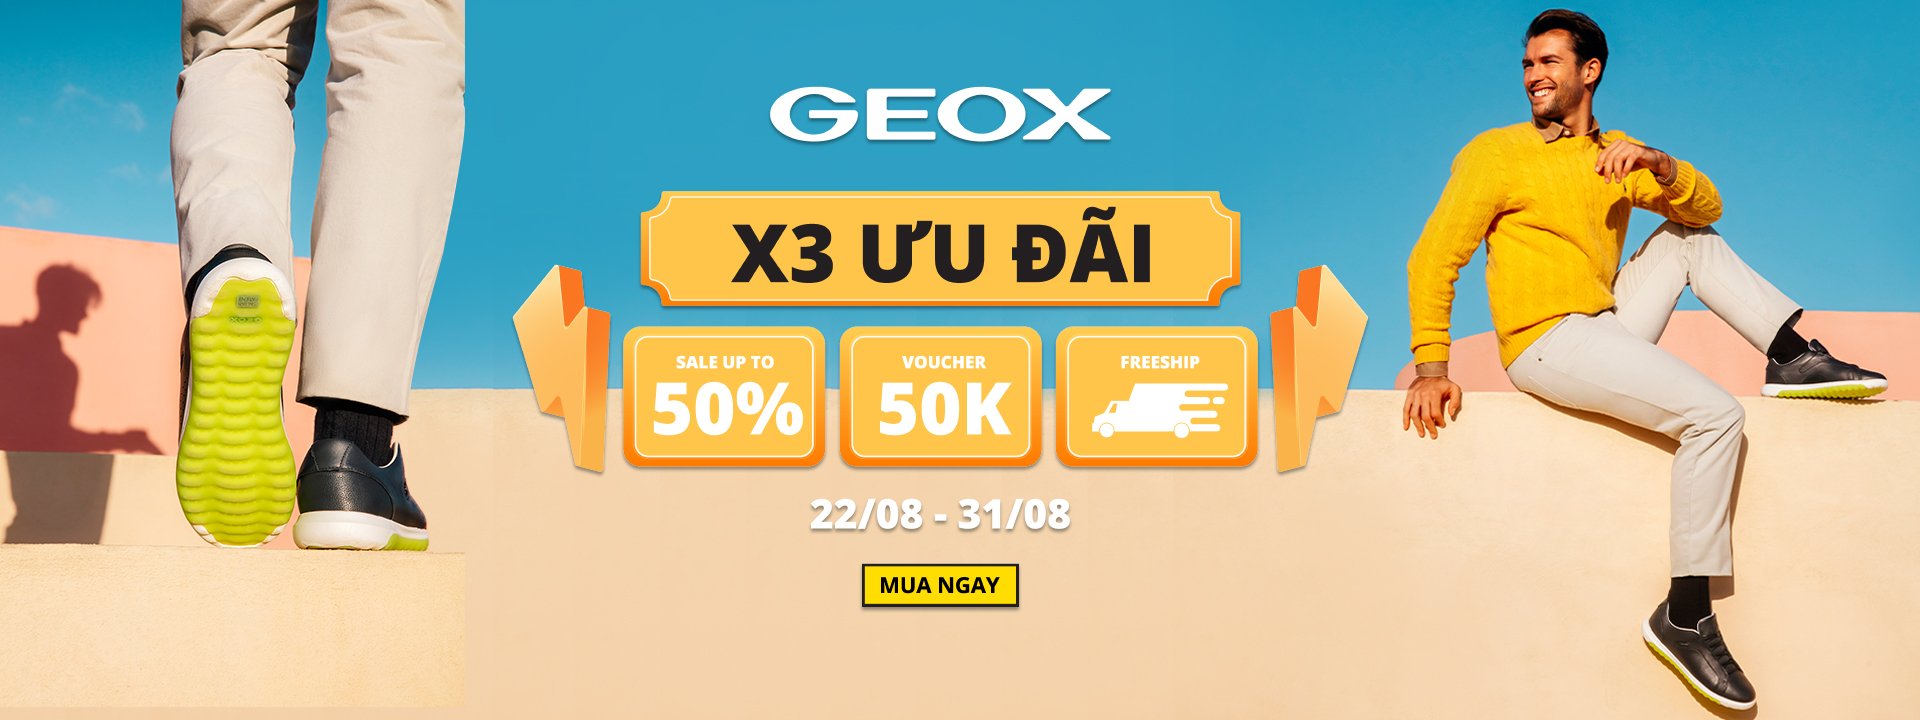 Sacrificio patrocinado Específicamente Geox - X3 ƯU ĐÃI Sale Up To 50% Voucher 50K – Shooz.vn